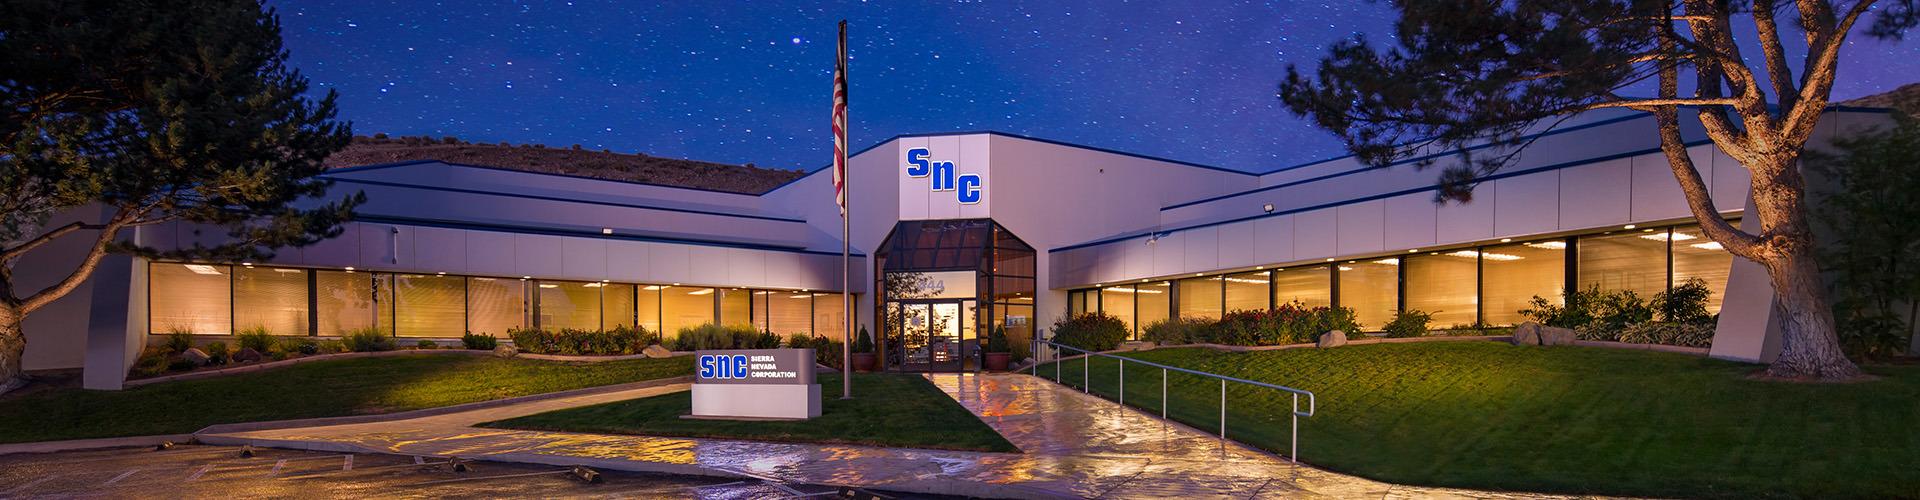 Contact Us - Sierra Nevada Corporation | SNC